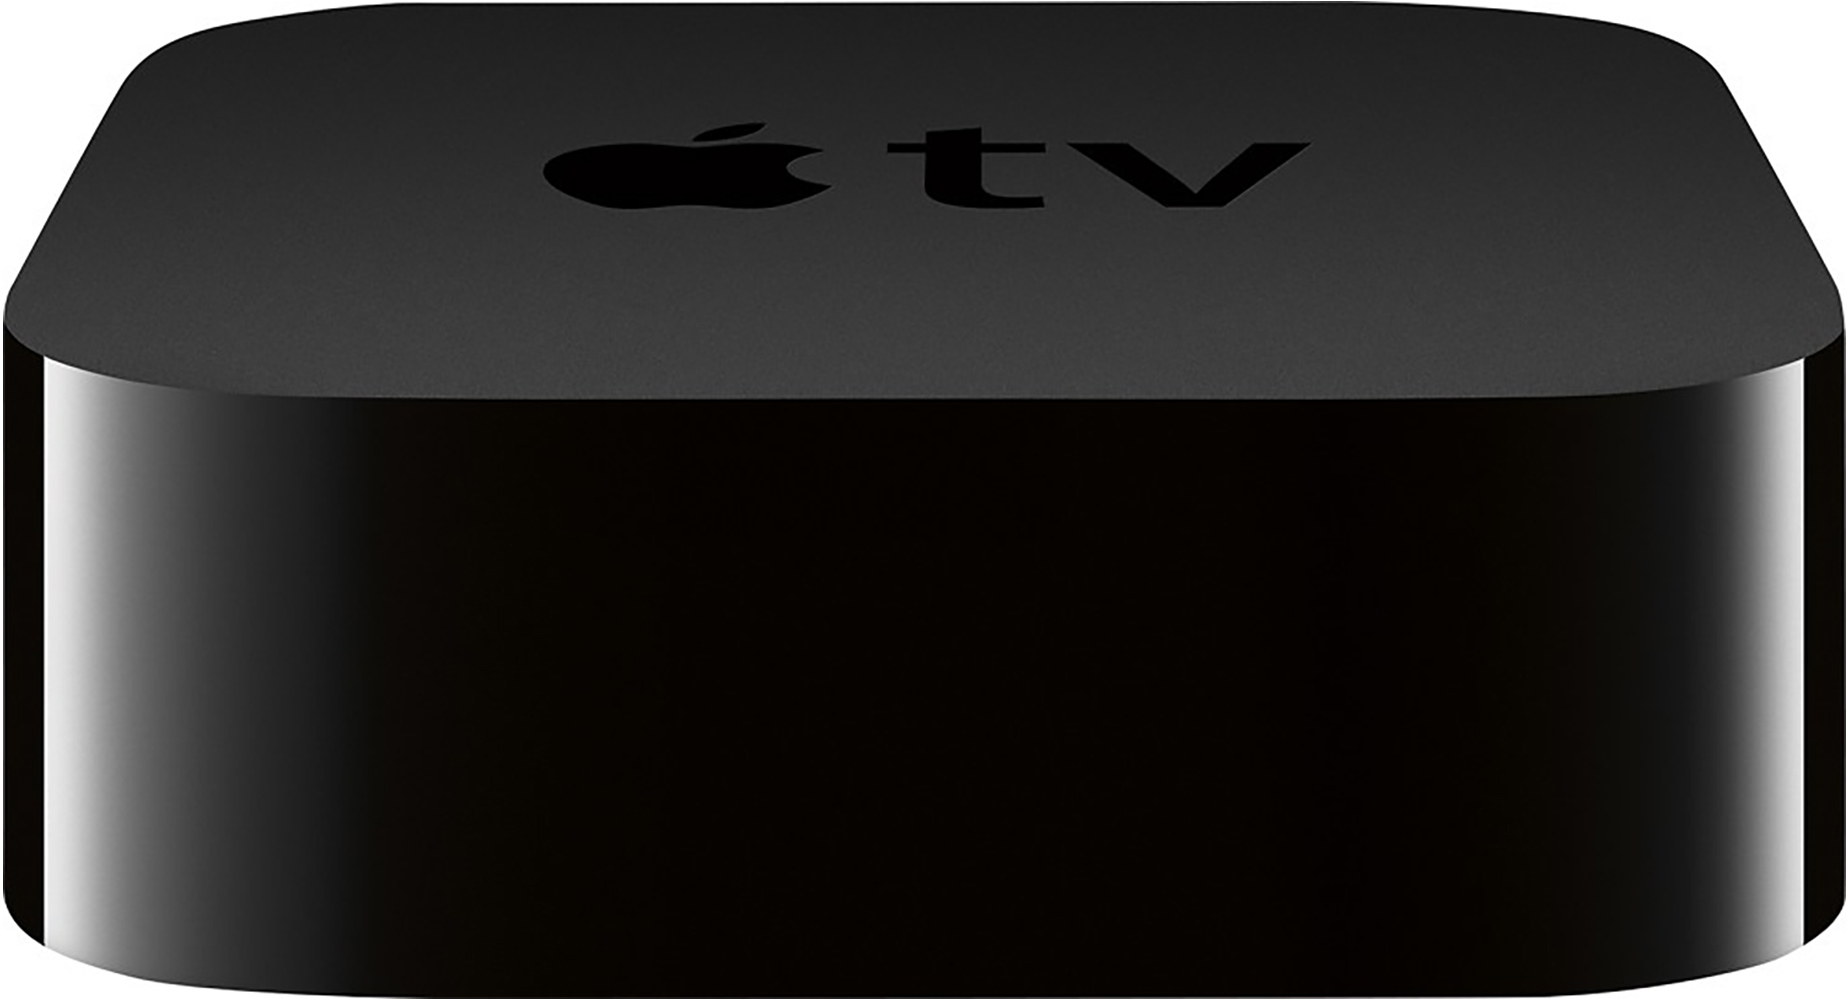 Apple TV 32GB (4th Generation) - Black - image 2 of 3